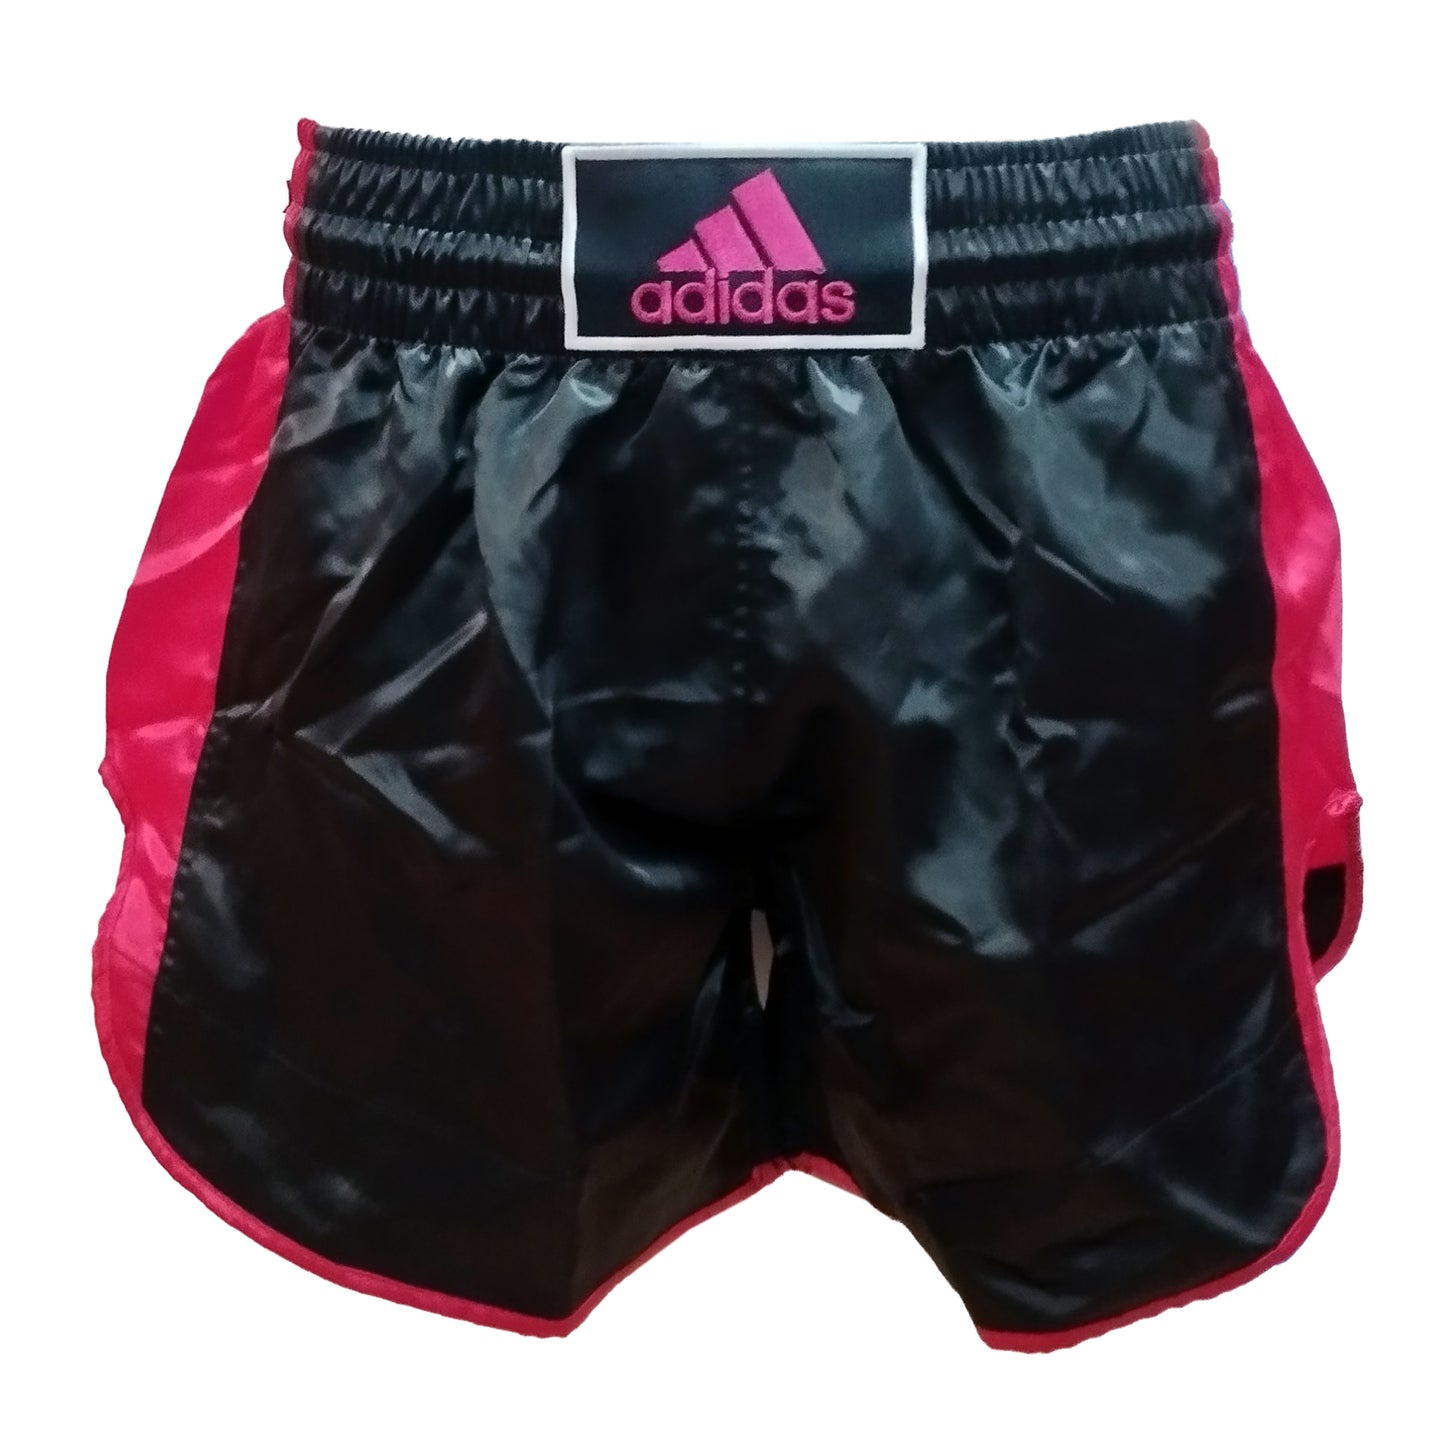 Adidas - Shorts MMA Pantaloncini Kick Boxing Full Contact Muay Thai nero-rosso